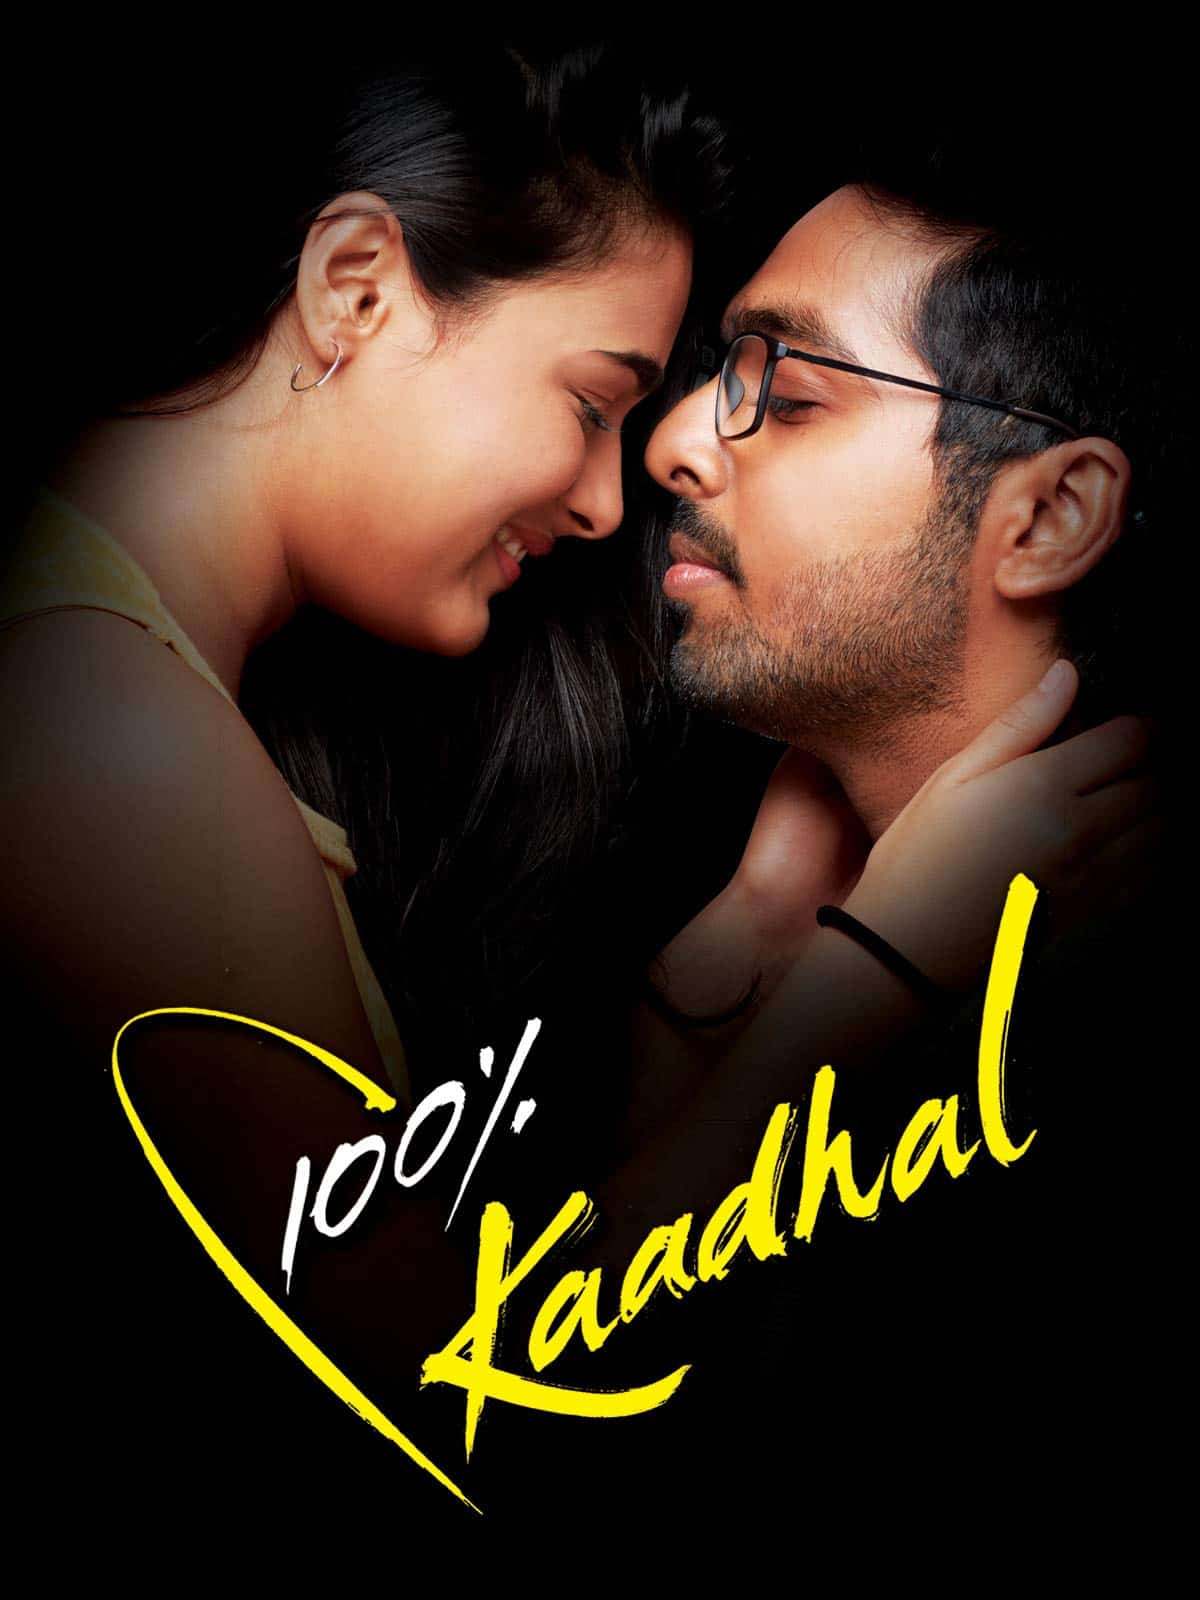 100% Kadhal 2019 Tamil Comedy Movie Online